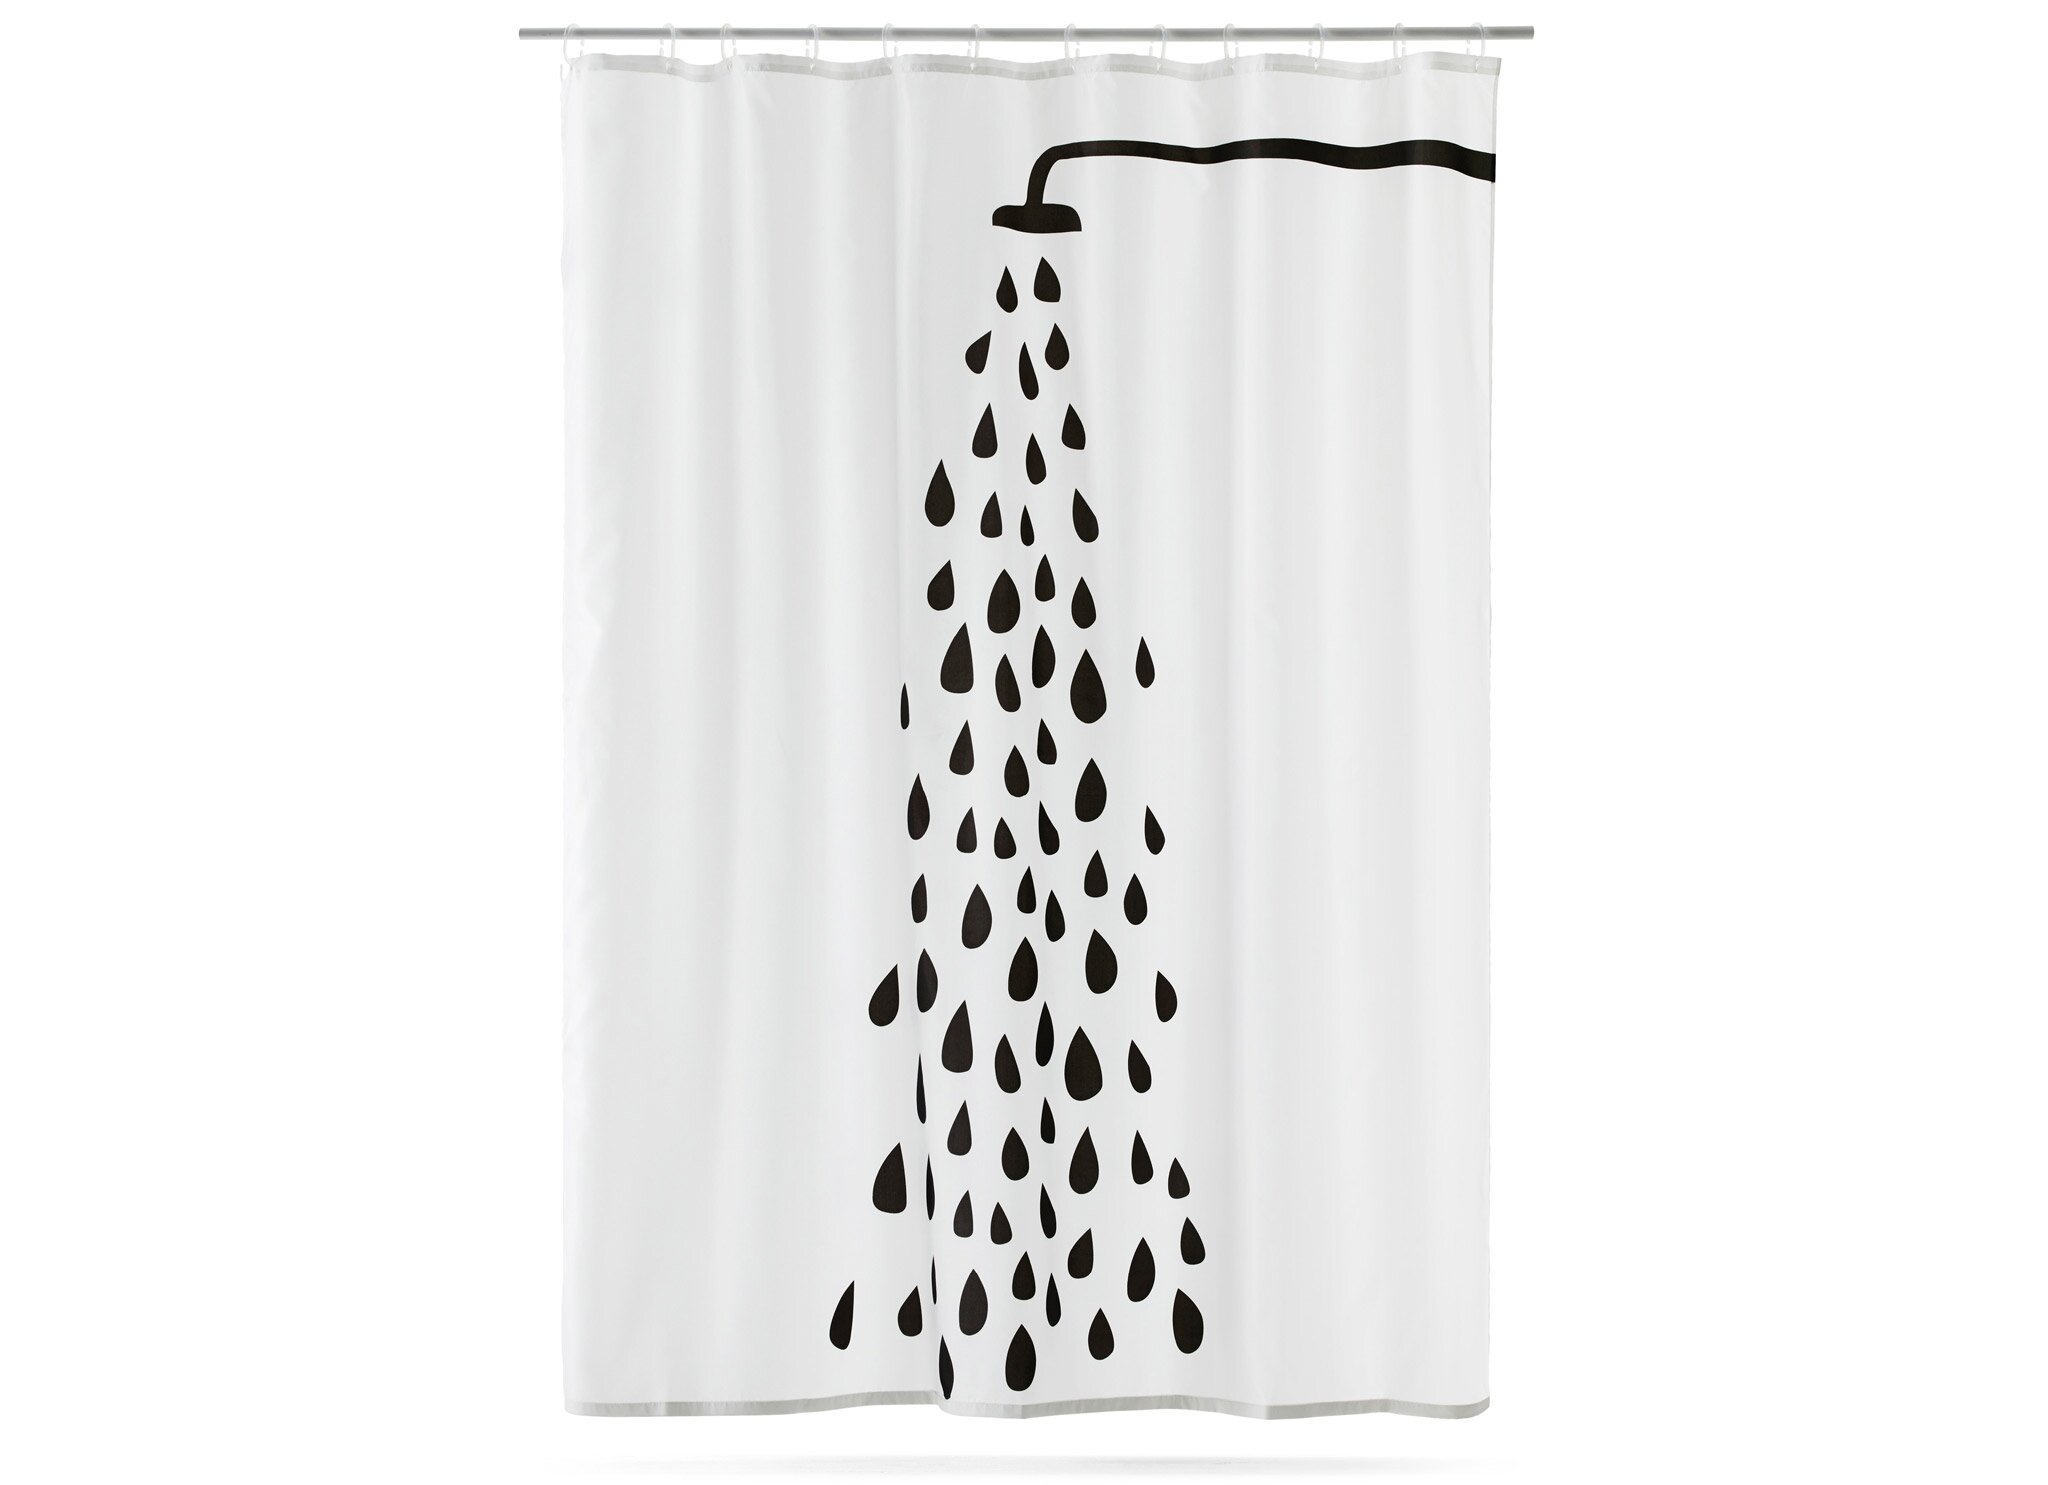 Ikea Shower Curtain | Shower Curtain Measurements | Cheap Shower Curtains